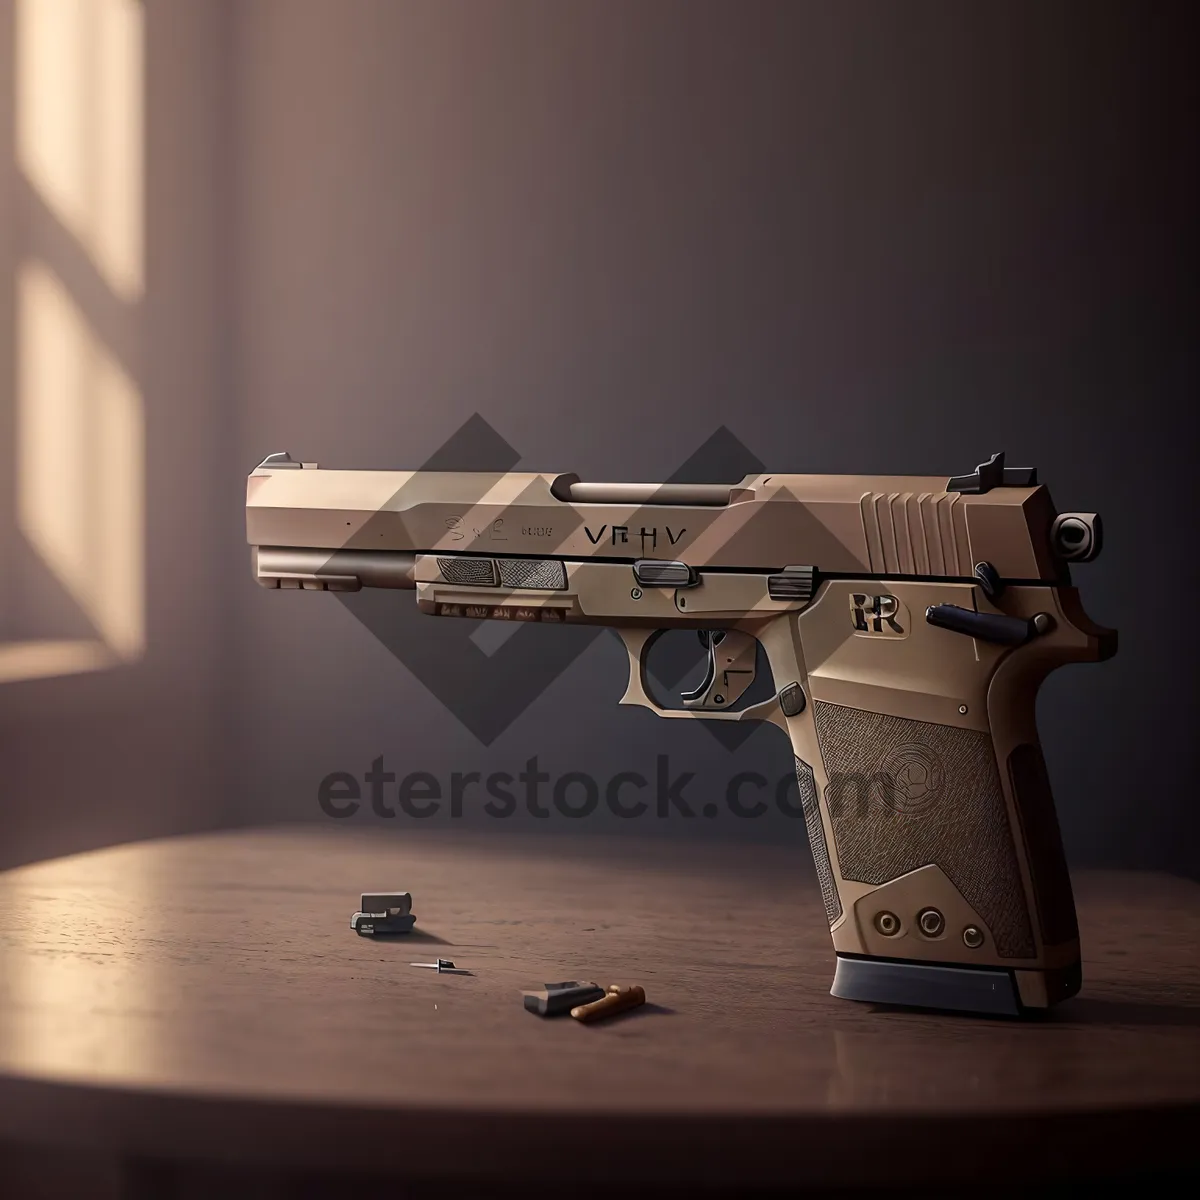 Picture of Desert Gunfire: Military Handgun for Enhanced Security